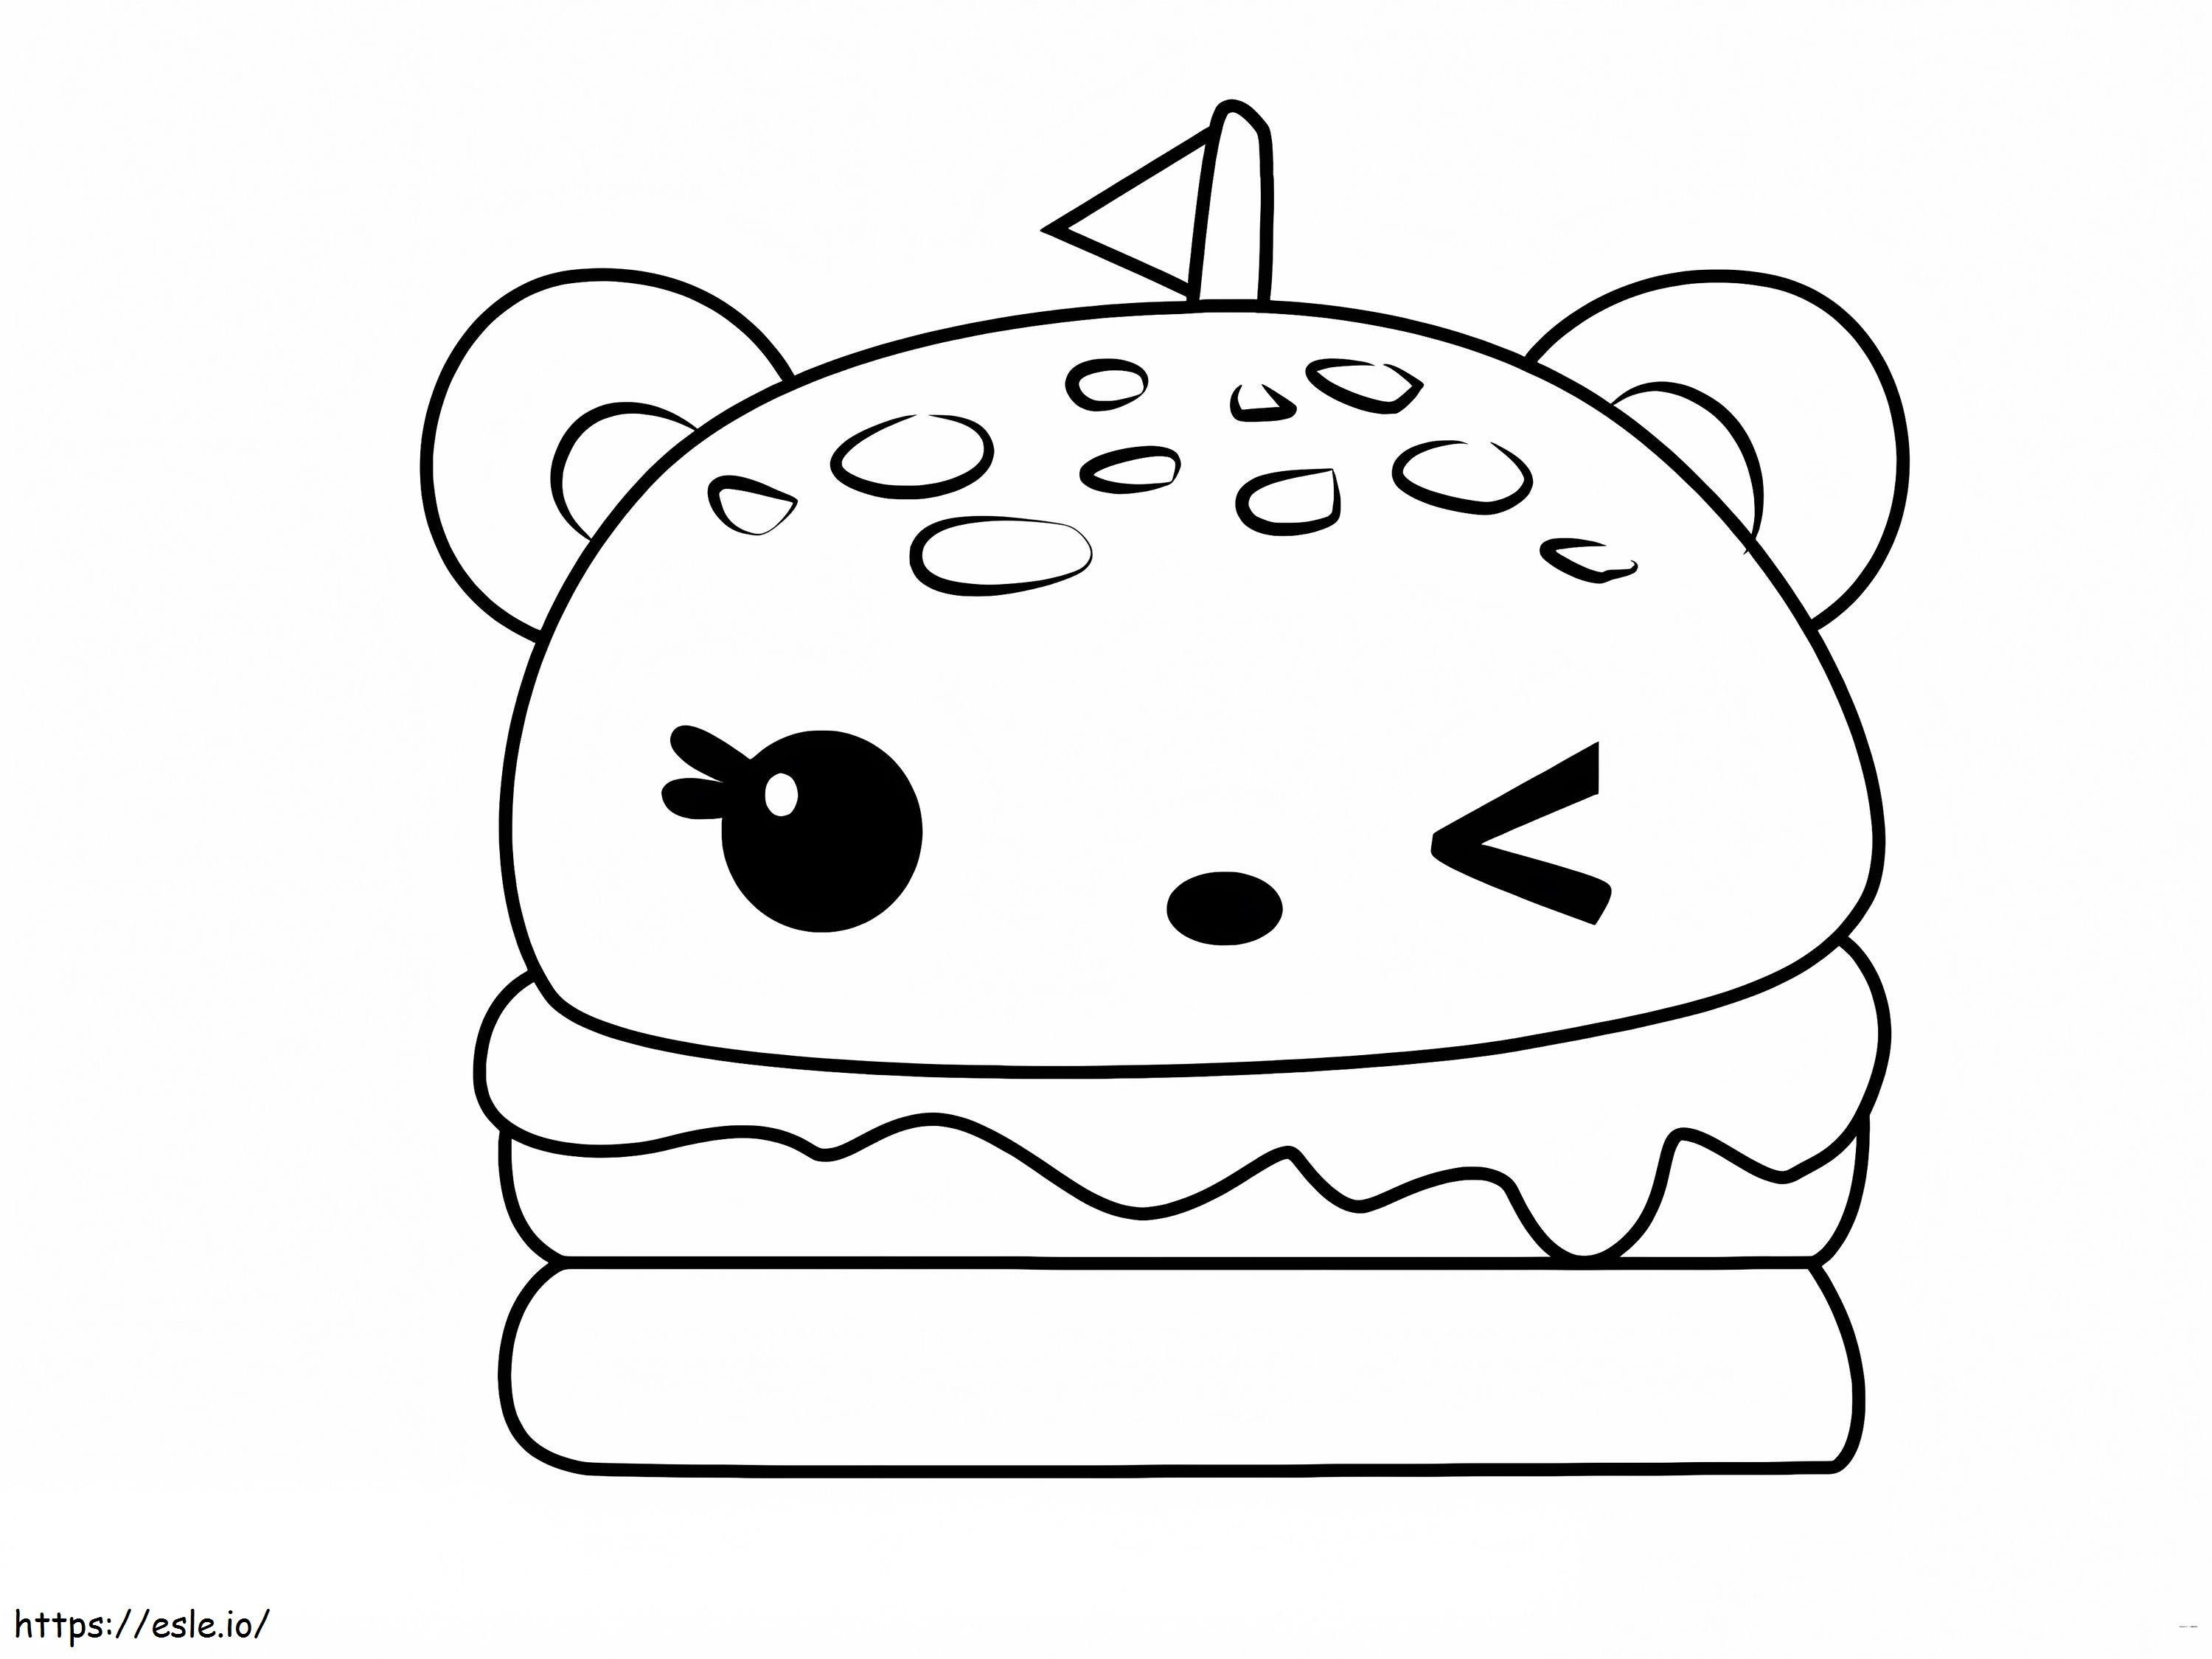 Hambúrguer Fofo para colorir